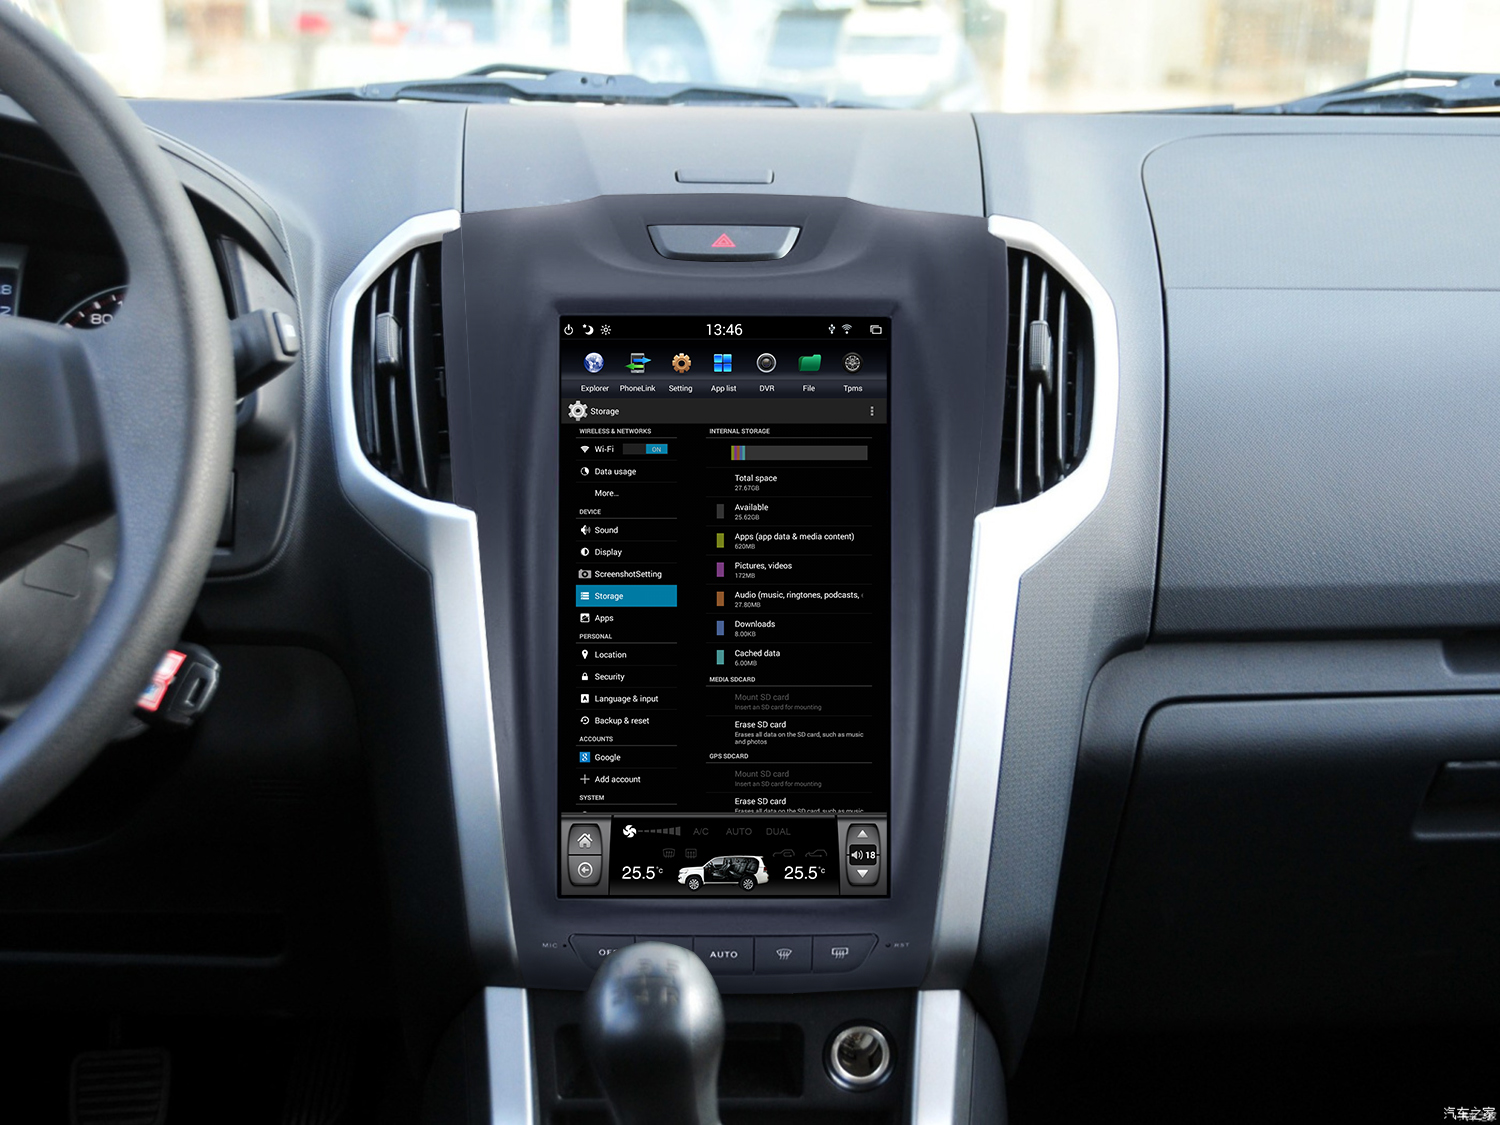 Chevrolet S10 Multimedia Gps Navigation Car Dvd Player